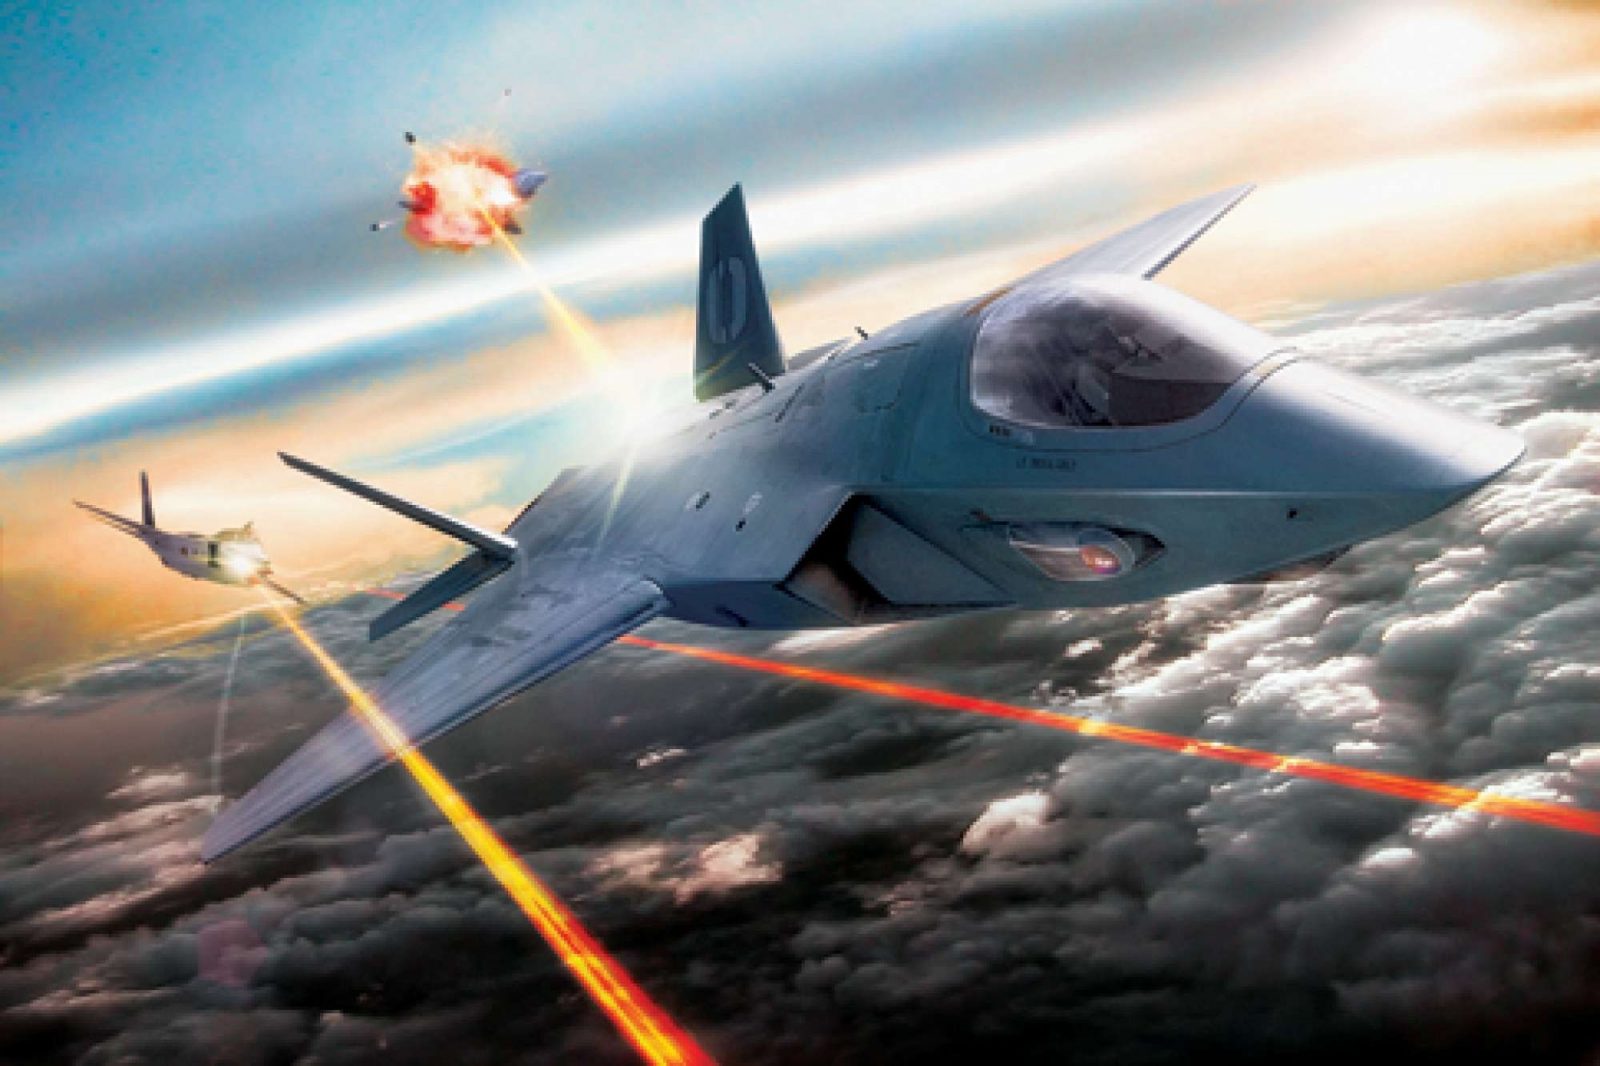 Innovative Features Of The Lockheed Martin F-35 Lightning II (Part 2)